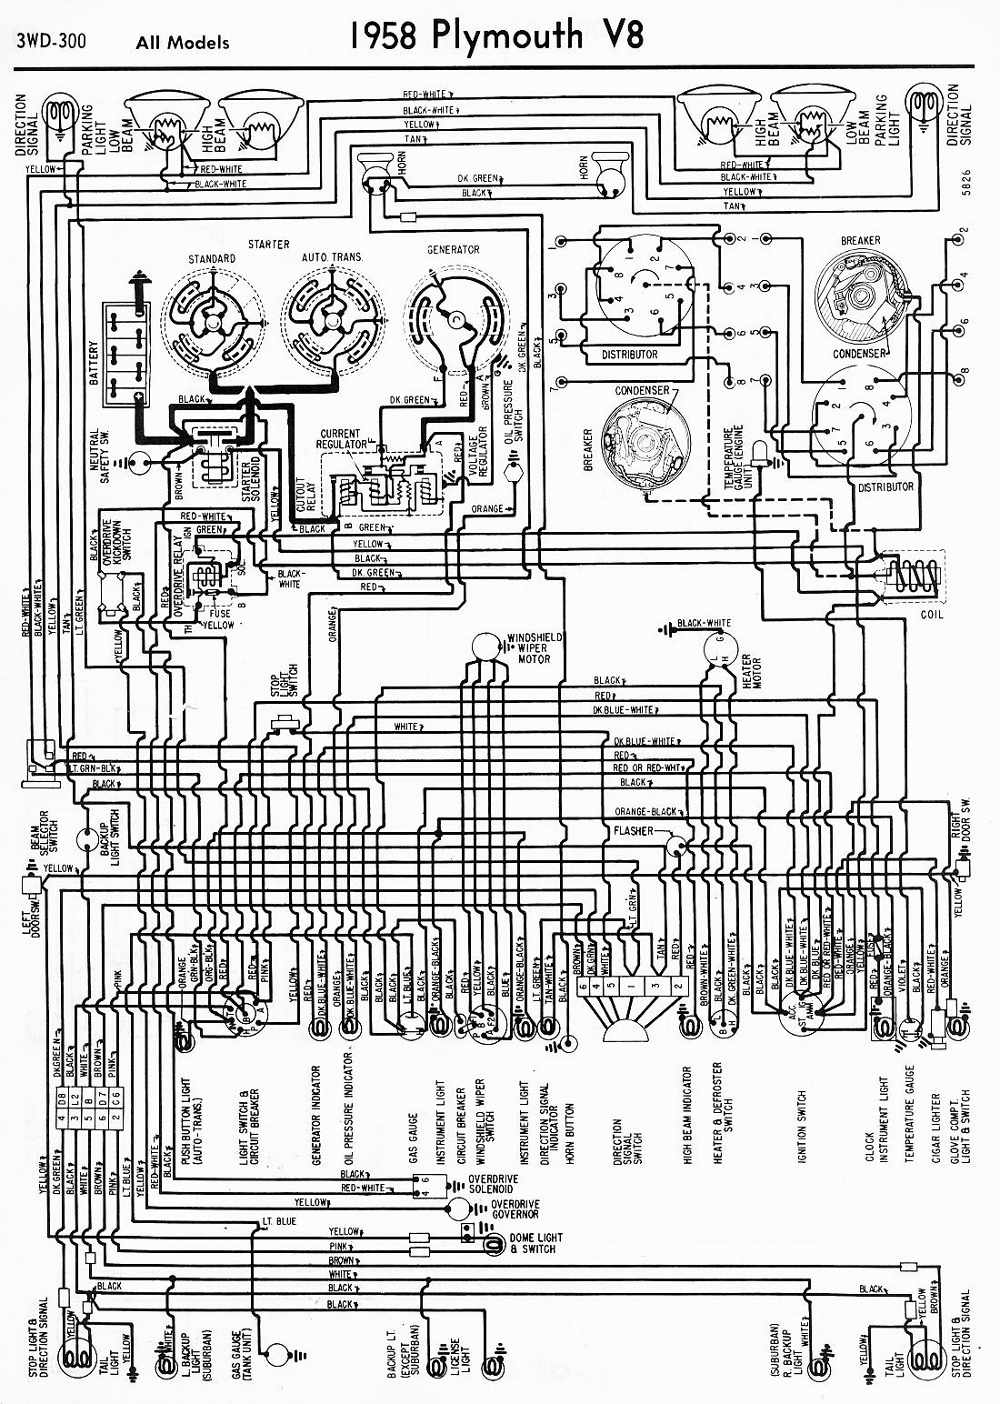 [DIAGRAM] 1966 Plymouth Wiring Diagram FULL Version HD Quality Wiring